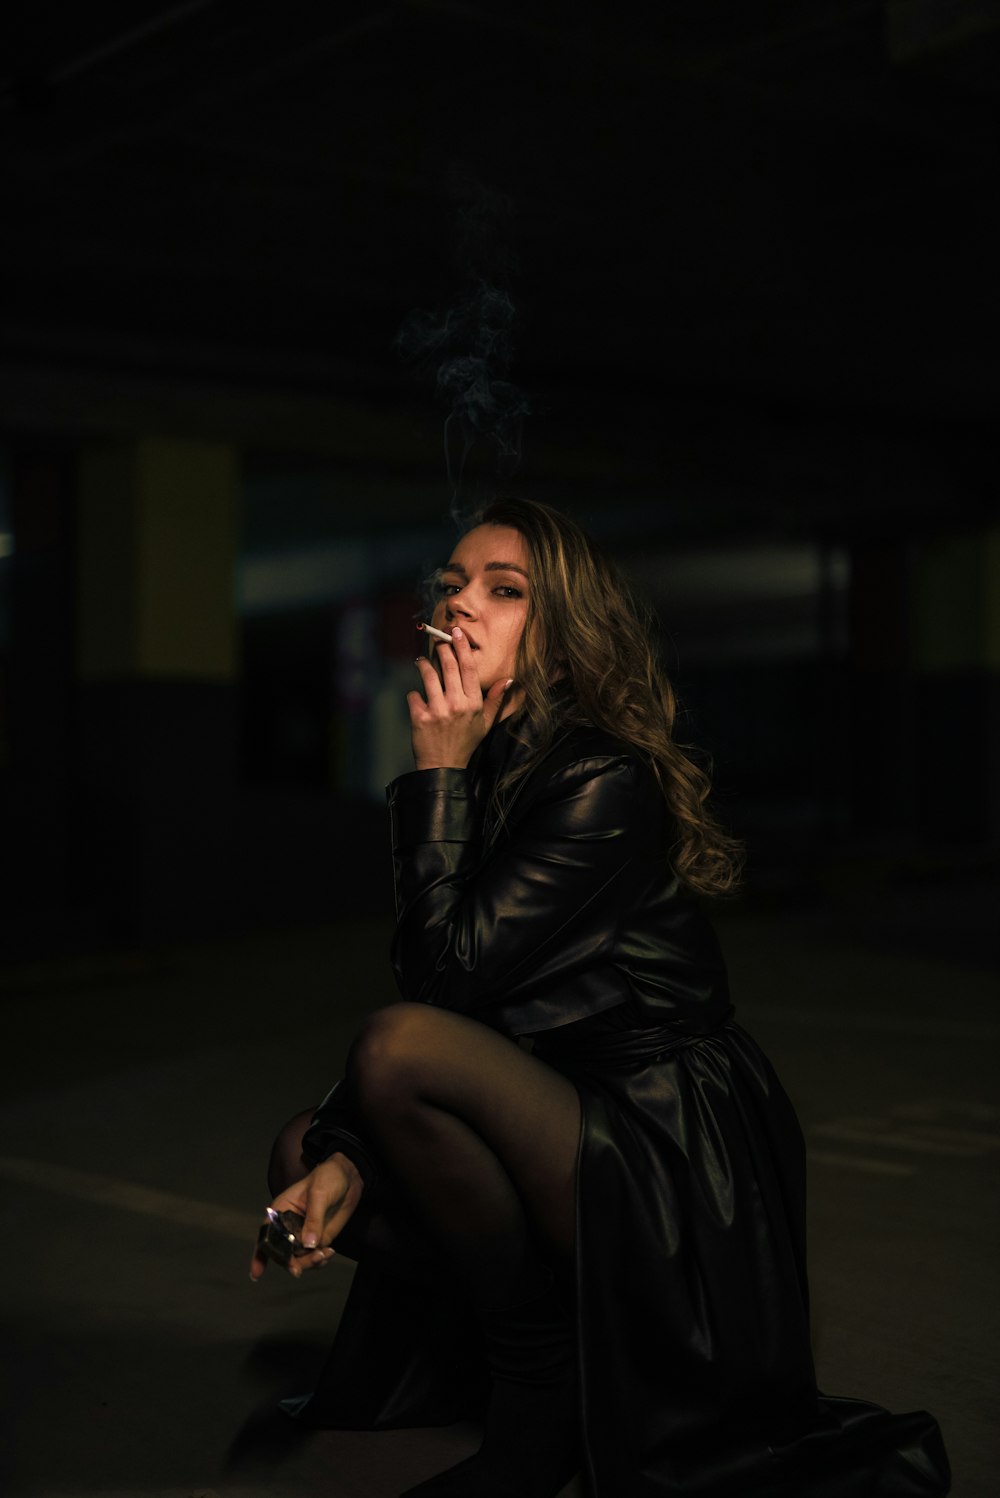 a woman in a black dress smoking a cigarette